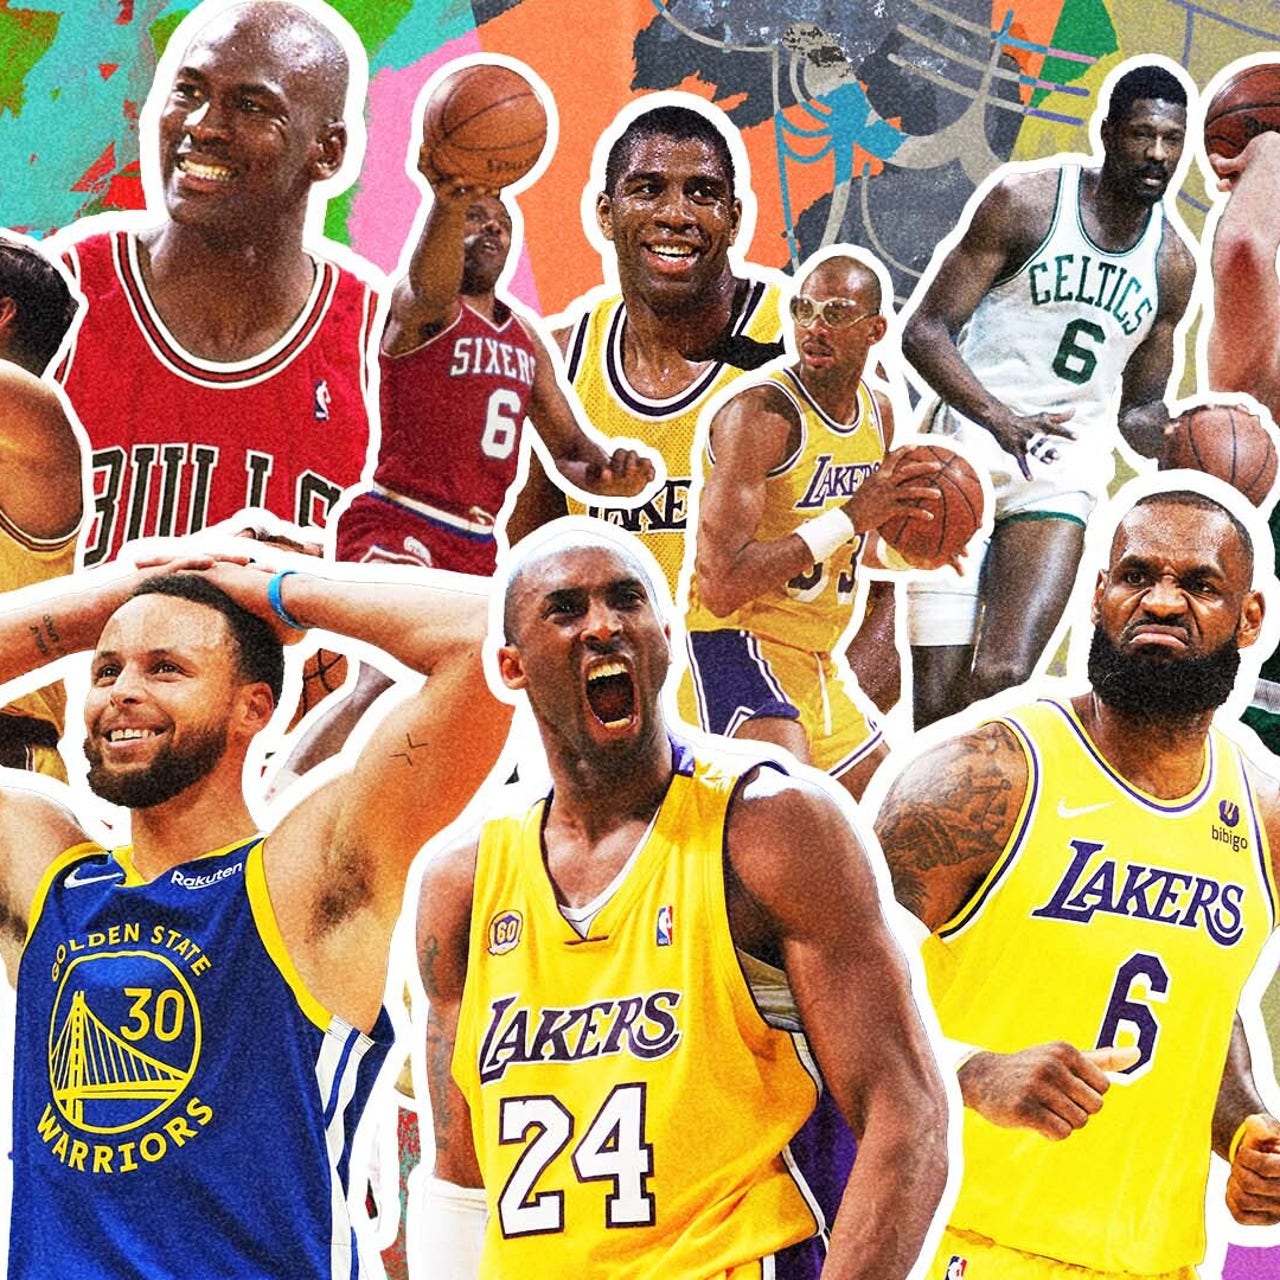 Best Selling NBA Jerseys of All-Time: MJ, Bird, LeBron, Kobe, Dr. J & Steph